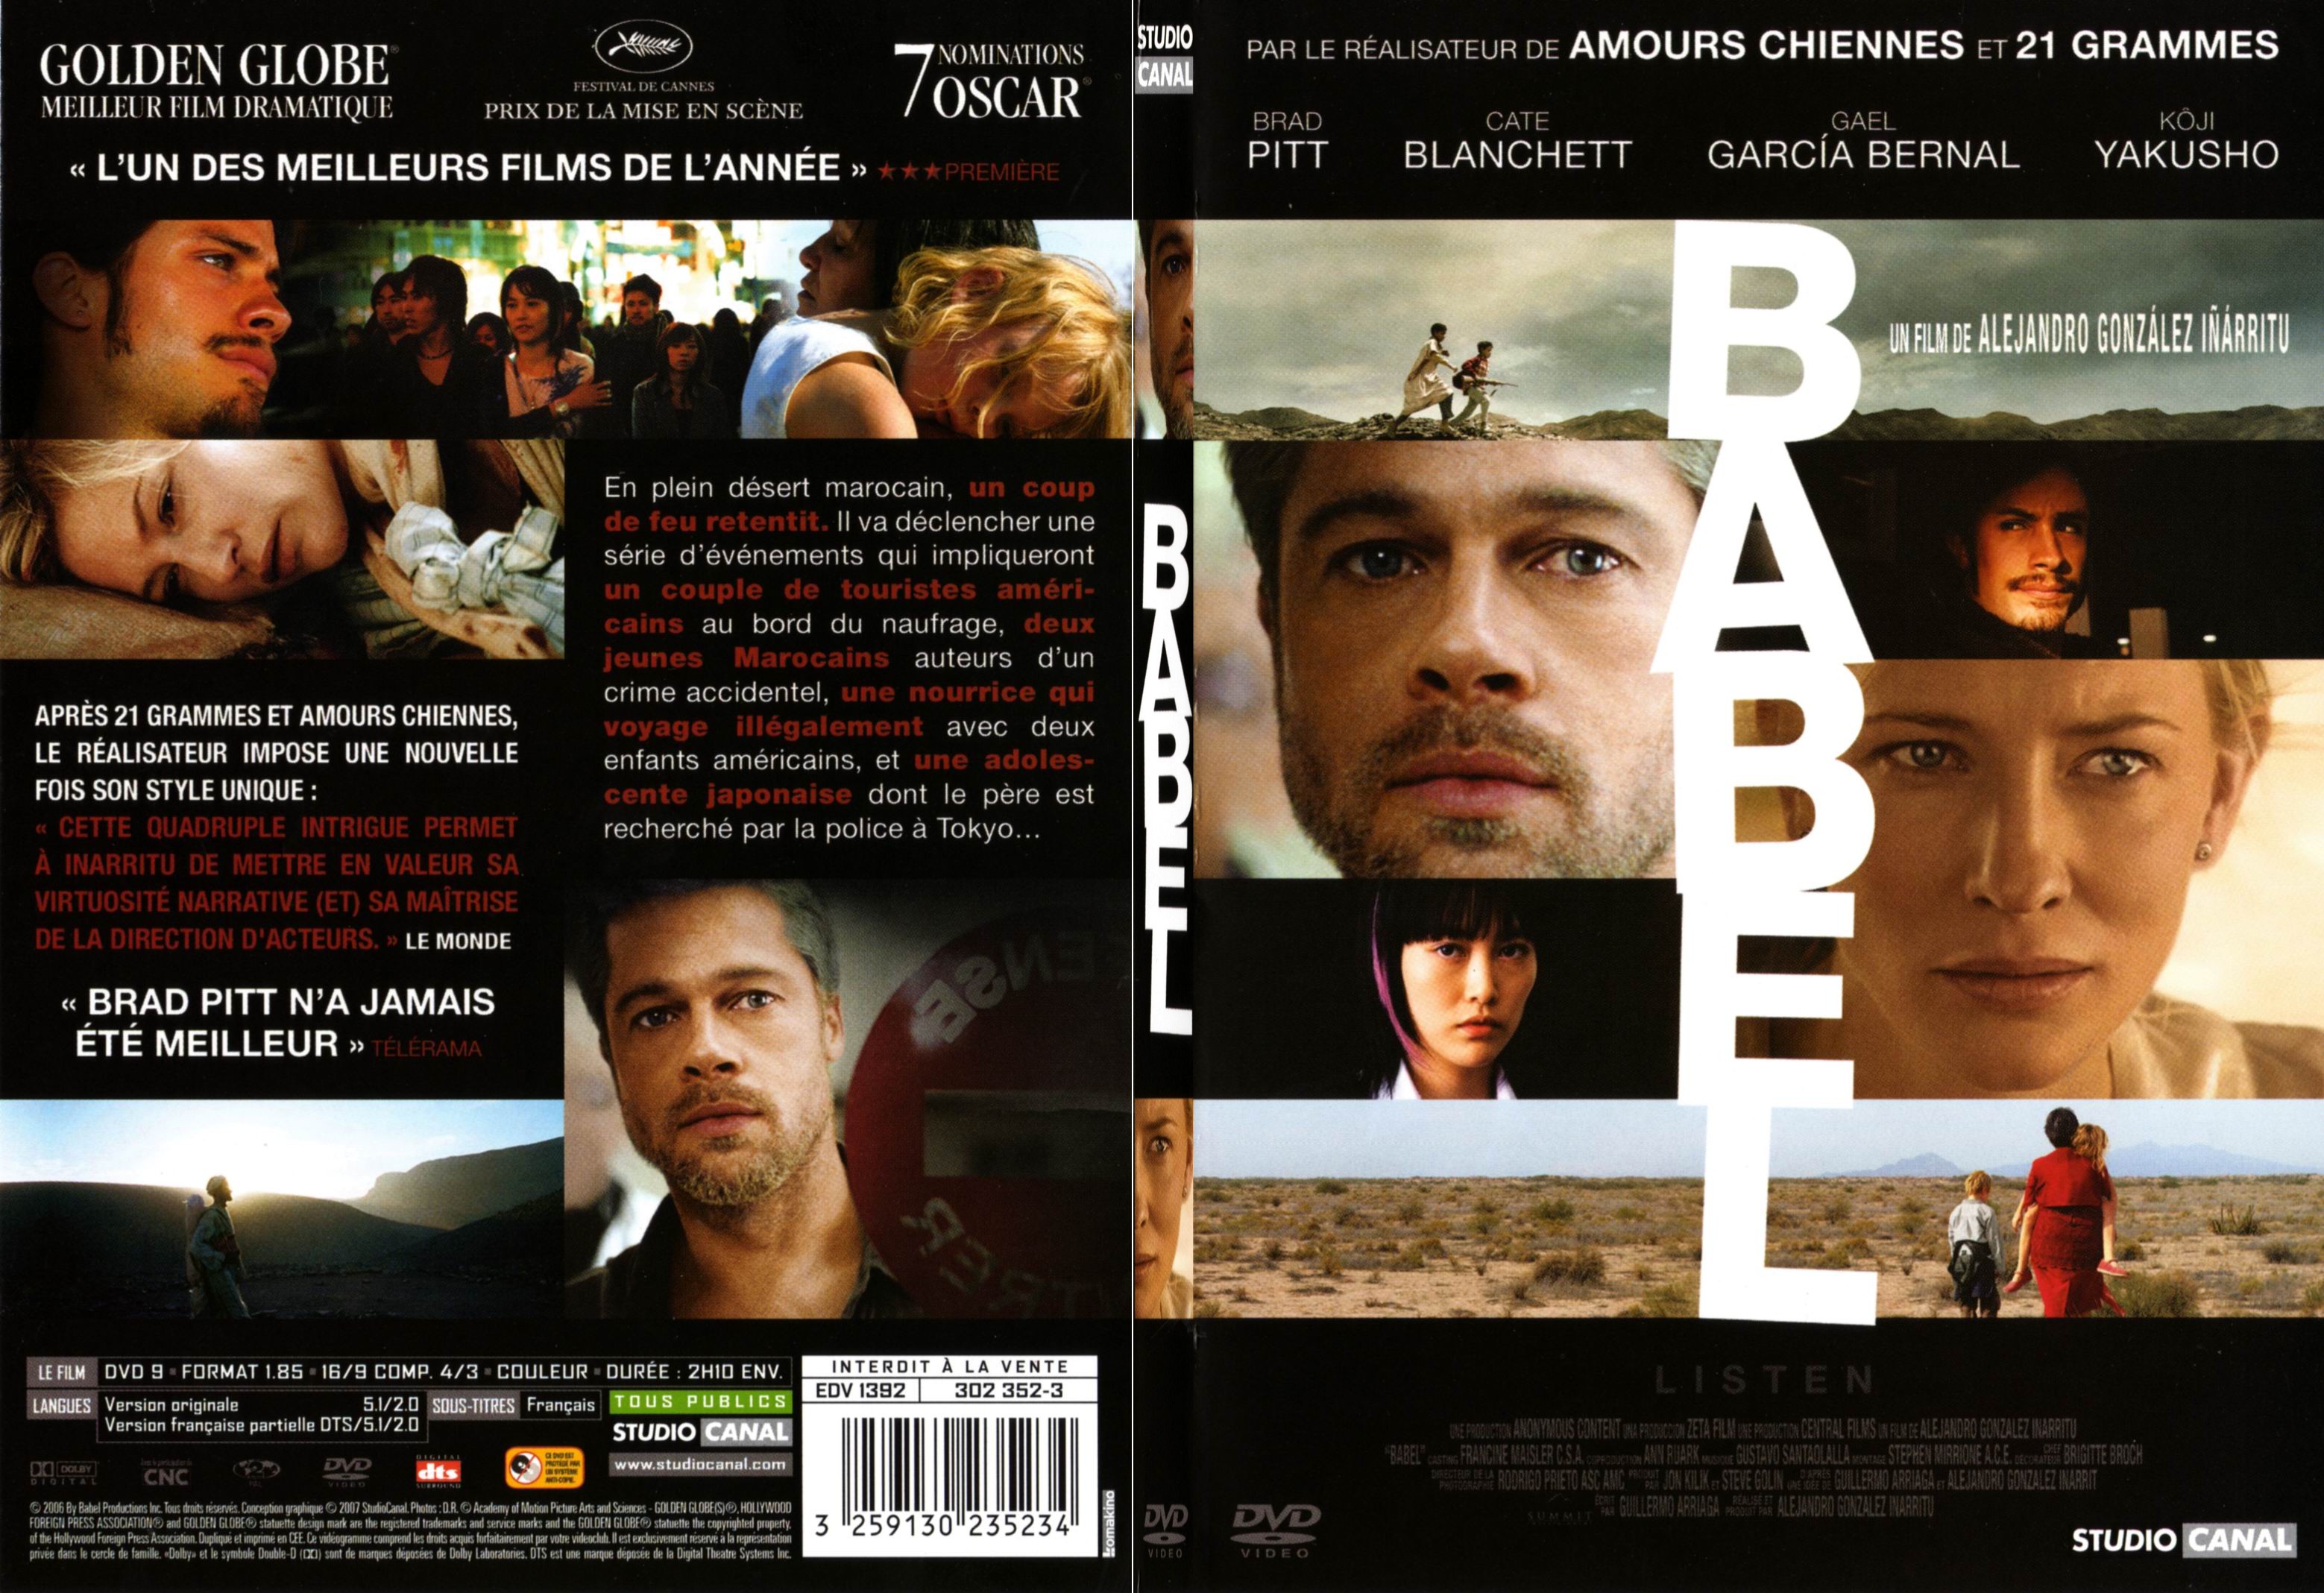 Jaquette DVD Babel - SLIM